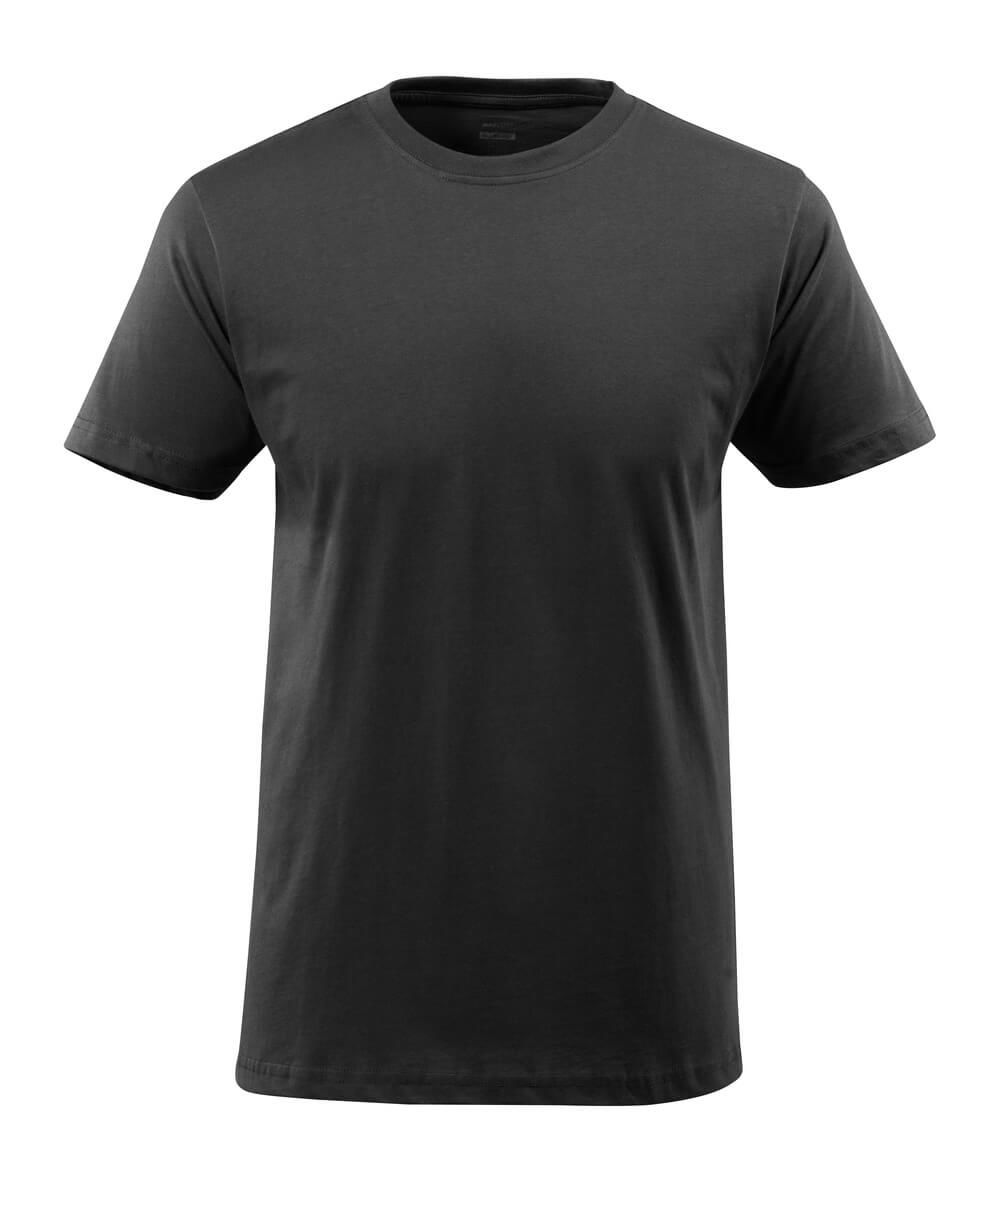 Mascot Workwear Black Cotton Short Sleeve T-Shirt, UK- 2XL, EUR- 2XL